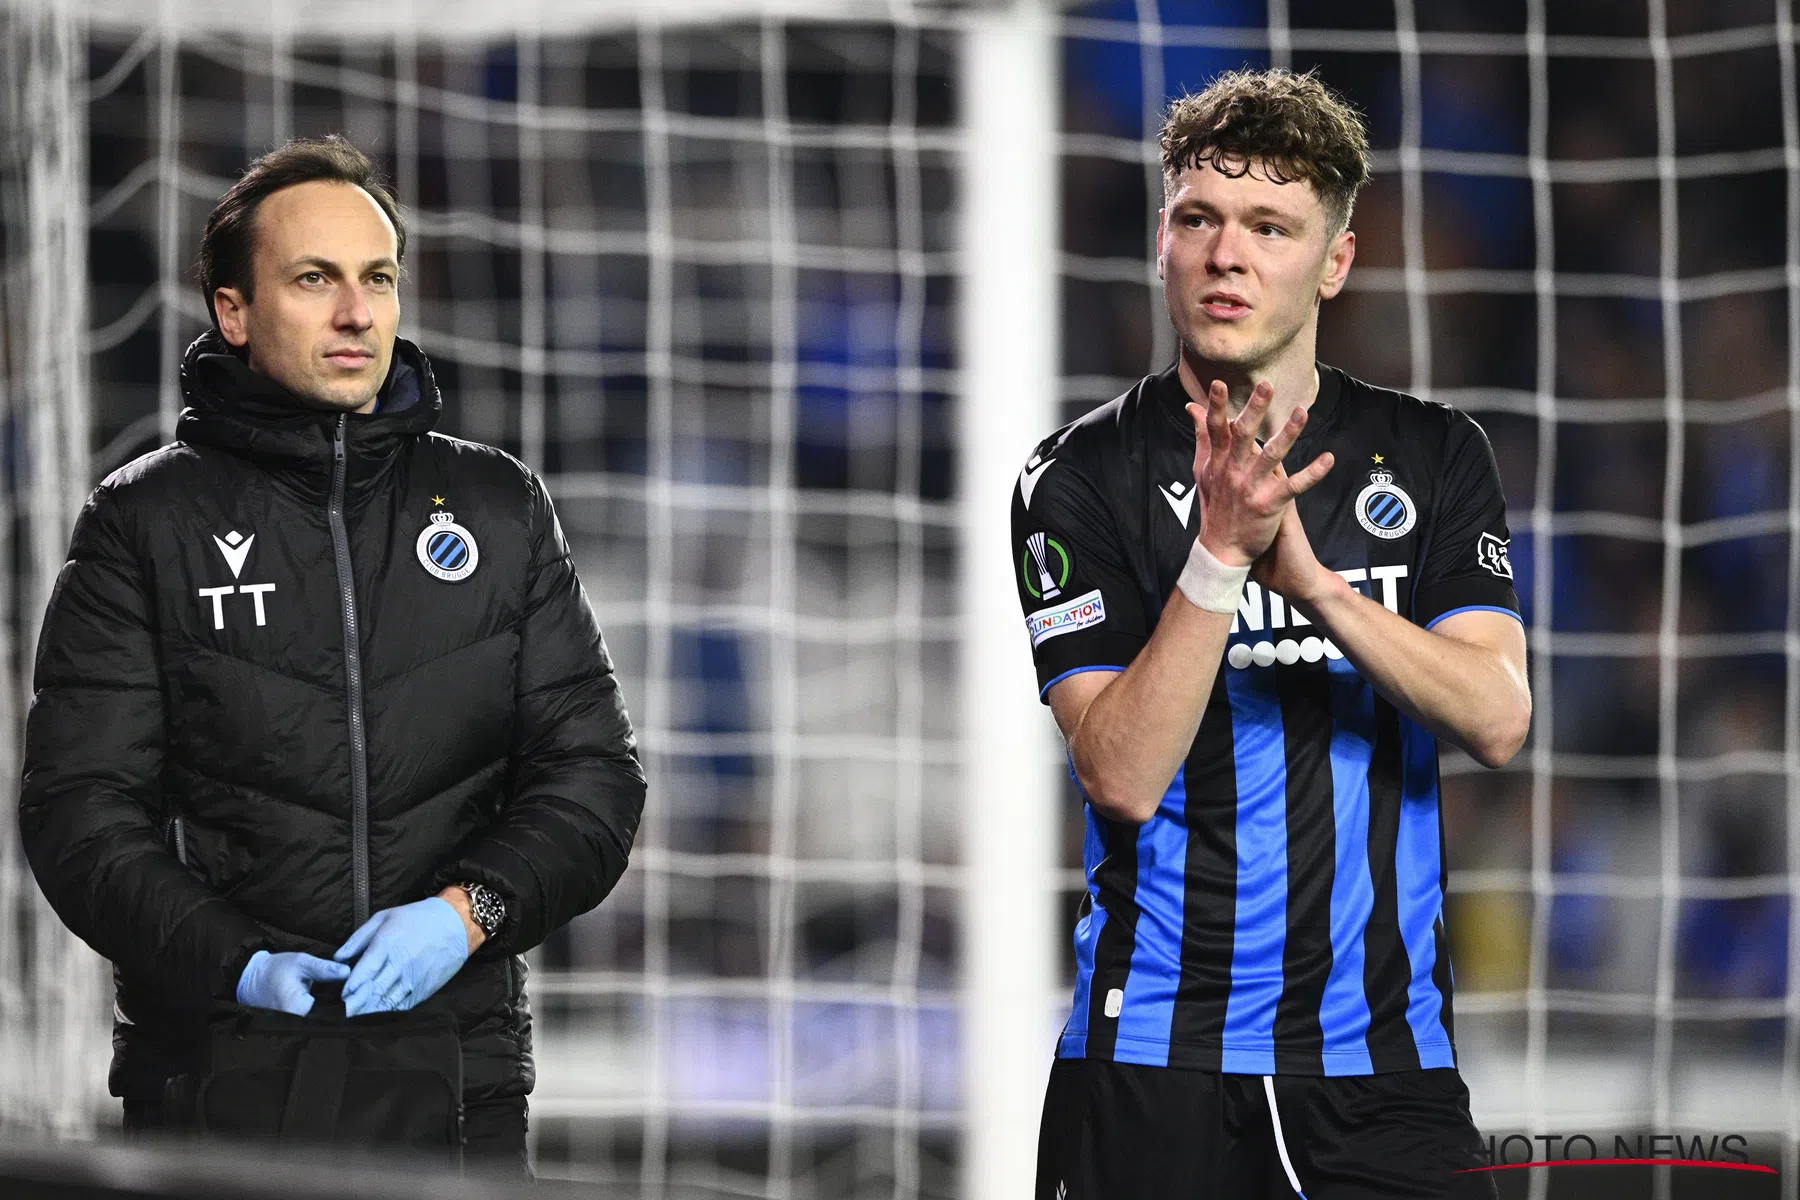 Skov Olsen van Club Brugge zag kansen om score in Conference League uit te breiden